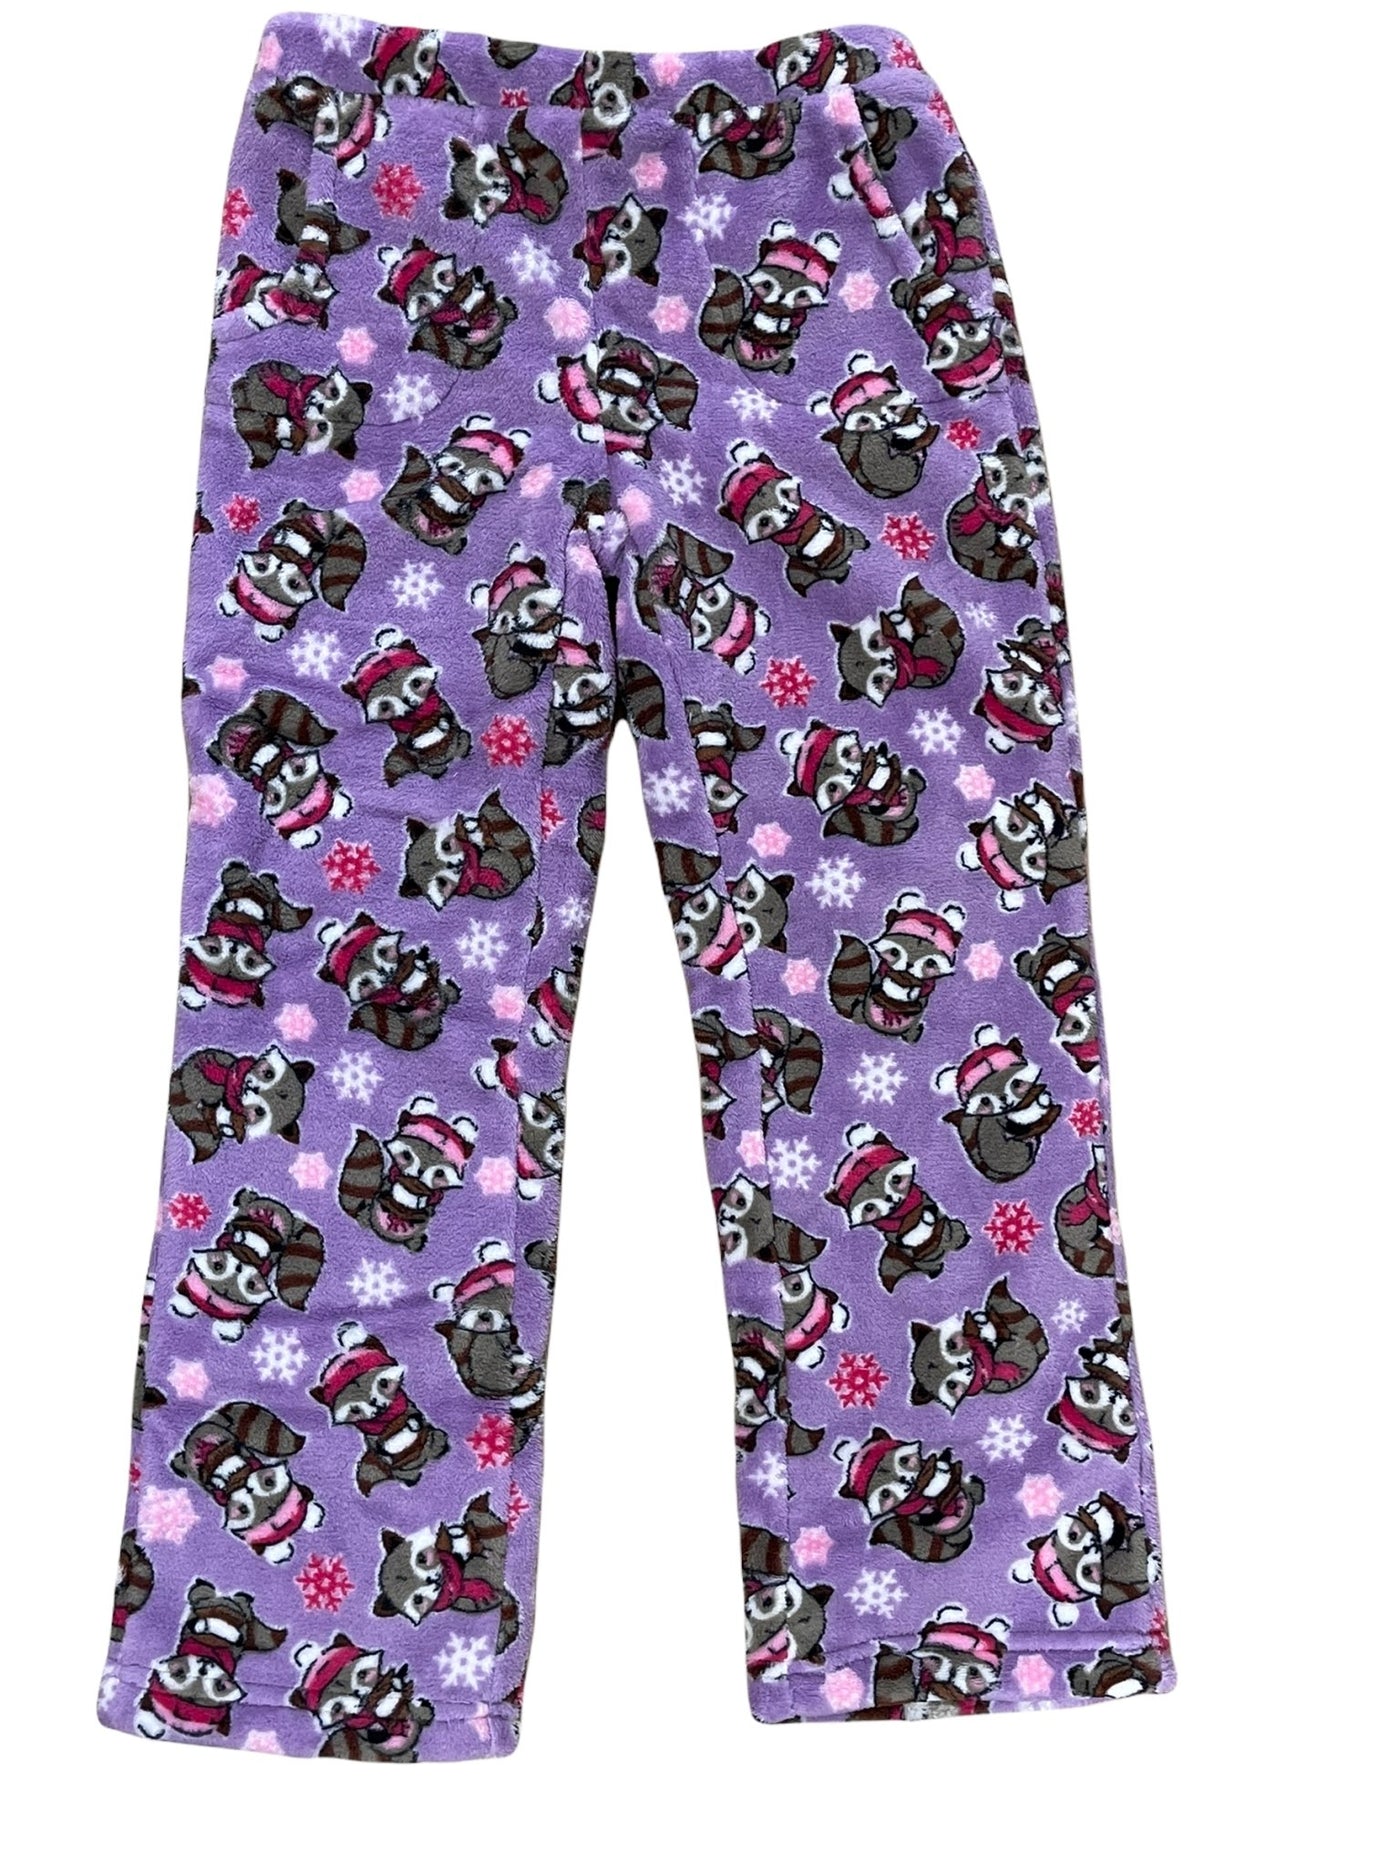 Komar Kids Fleece Girls Pajama Pants Size 10/12 Green/Pink/Blue Monkeys  Hearts